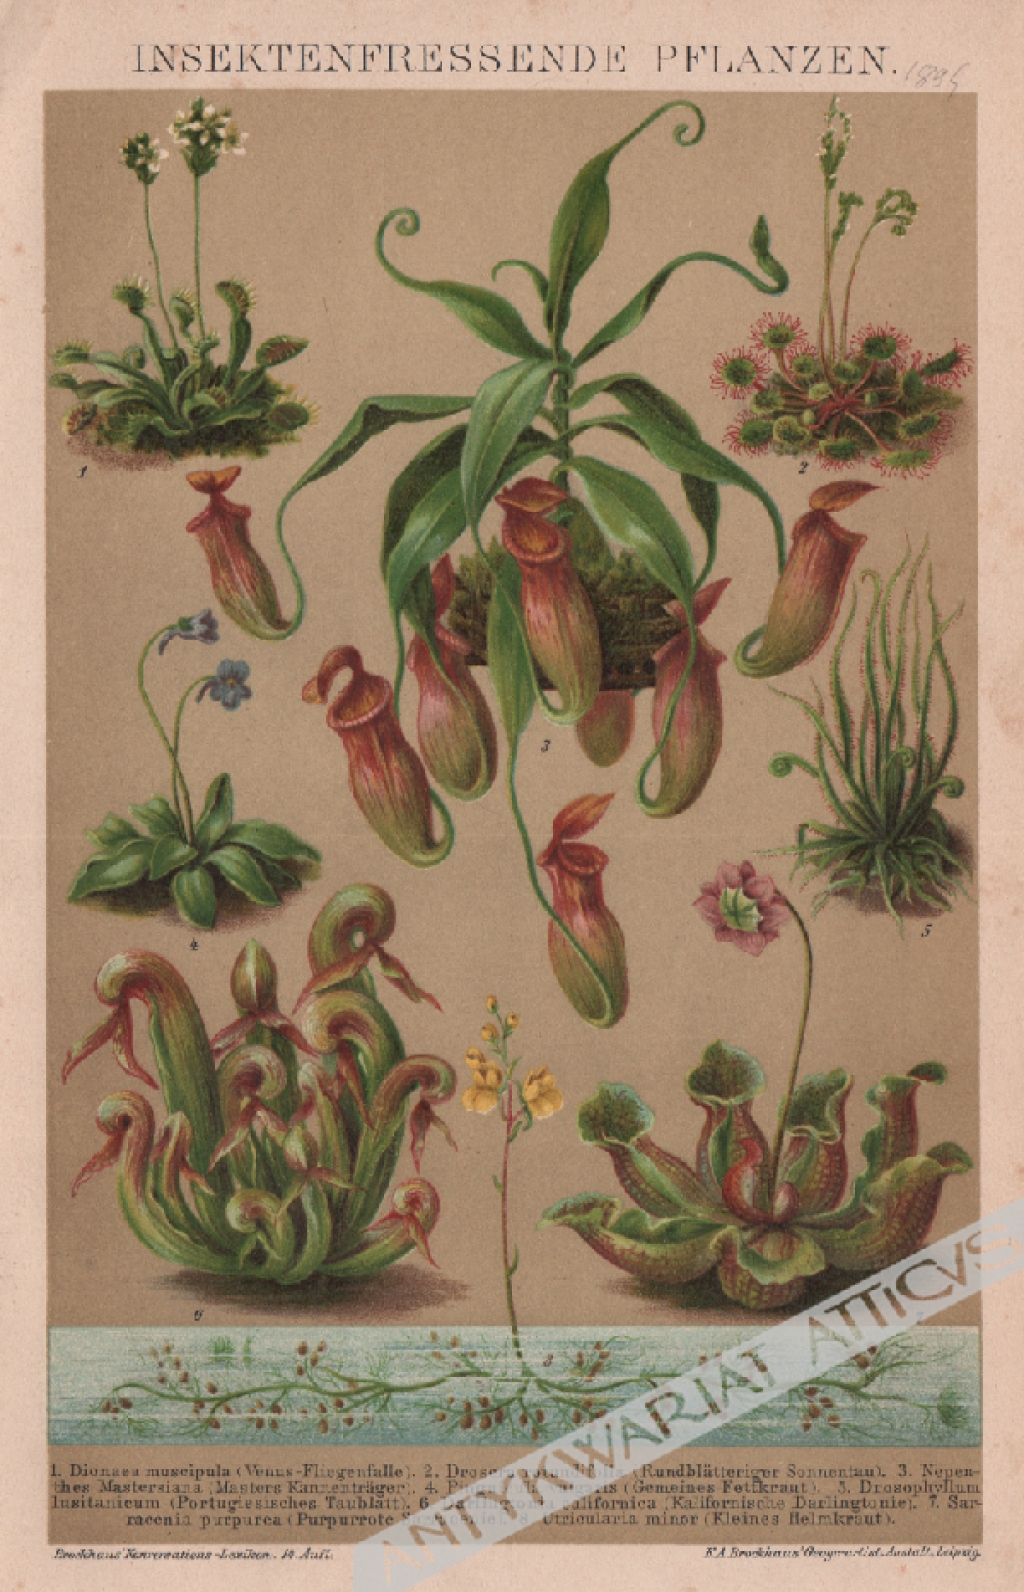 [rycina, 1898] Insektenfressende Pflanzen [rośliny owadożerne]